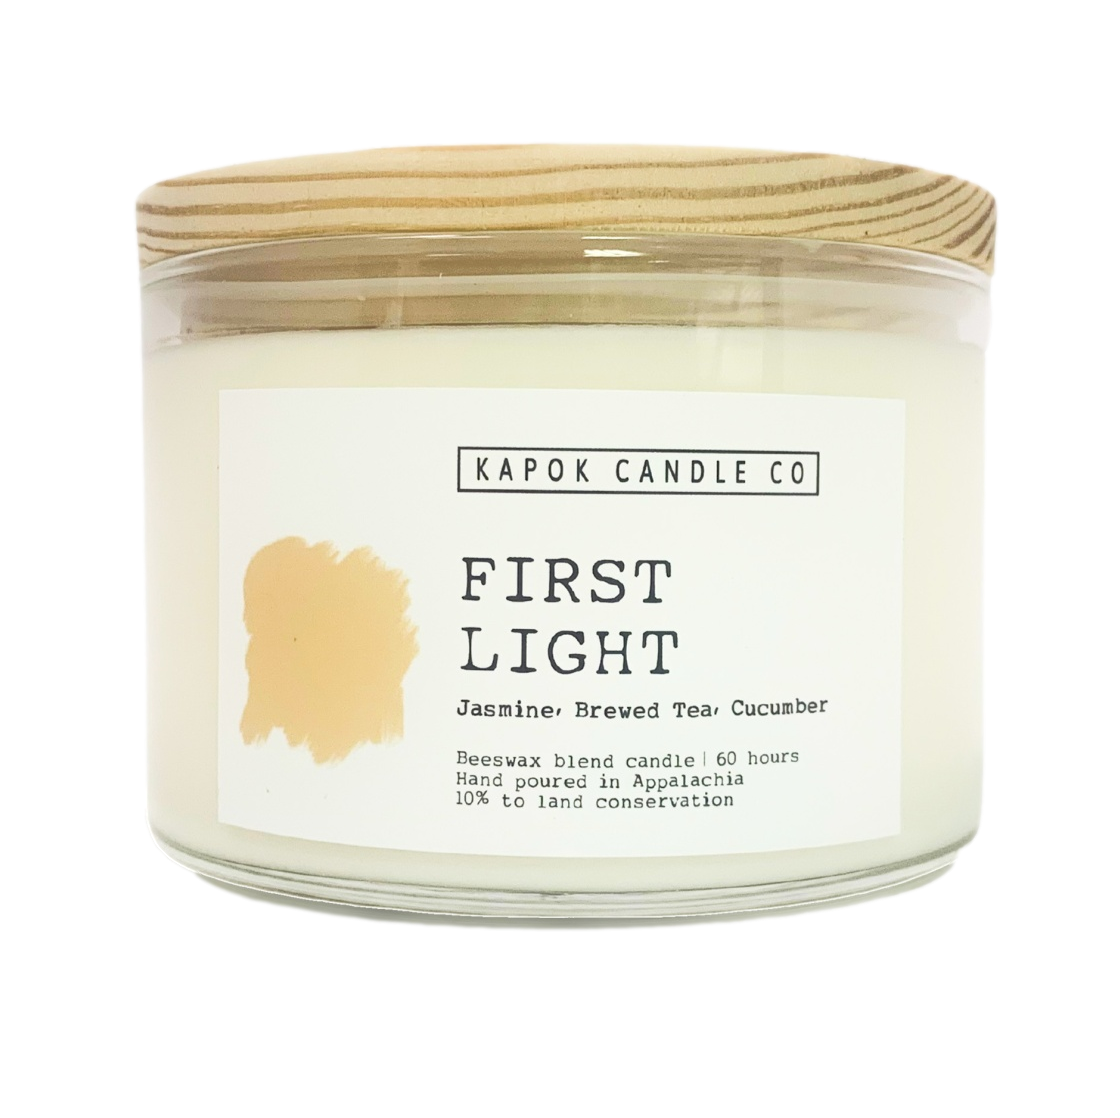 First Light Beeswax Blend Candle, 100% Cotton Wicks, Wooden Lid